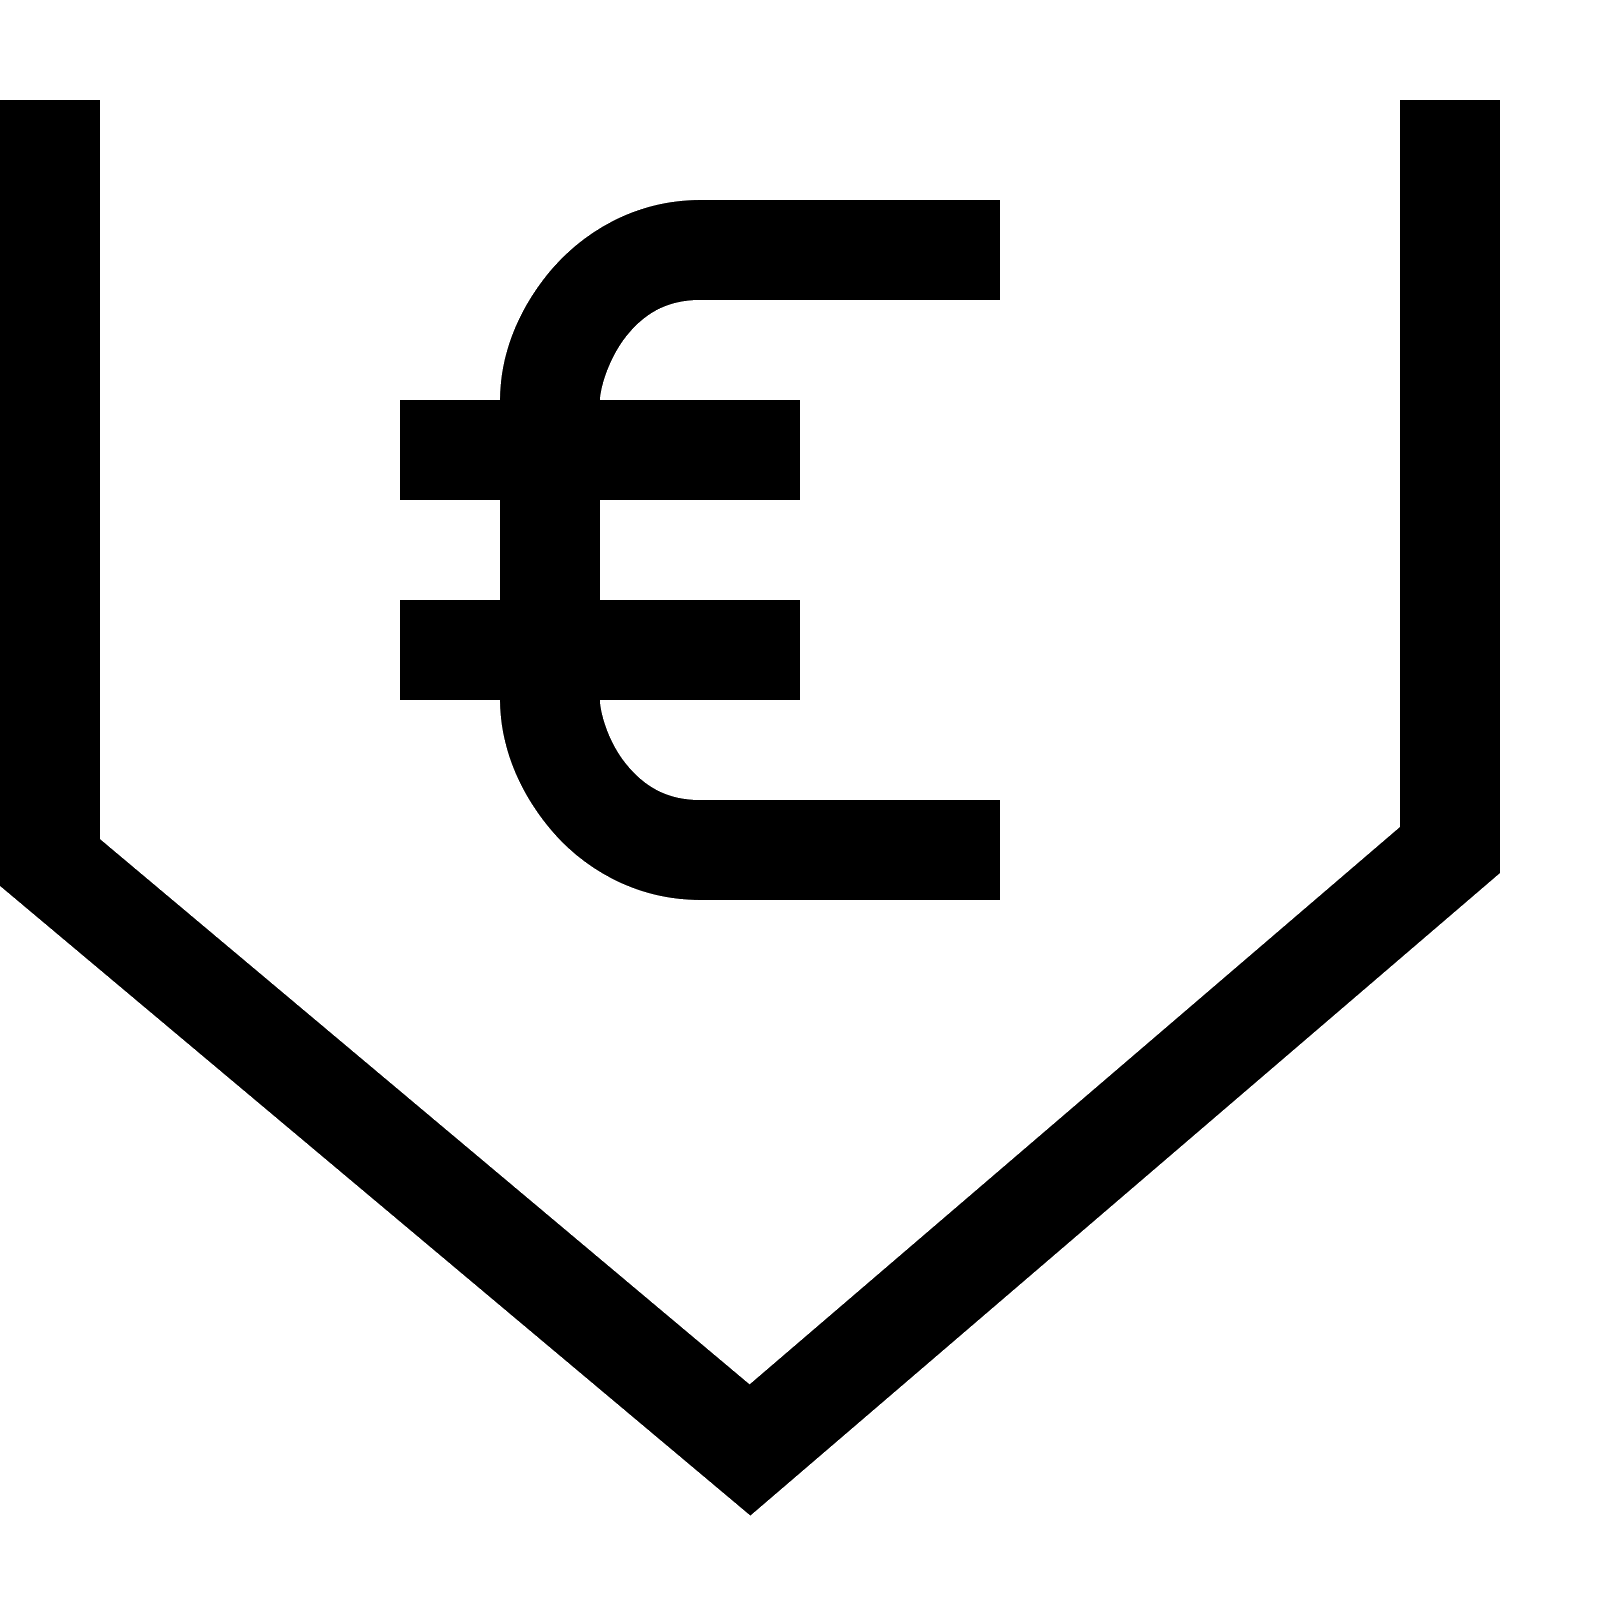 Euro Logo - Euro Symbol PNG Transparent Images | PNG All